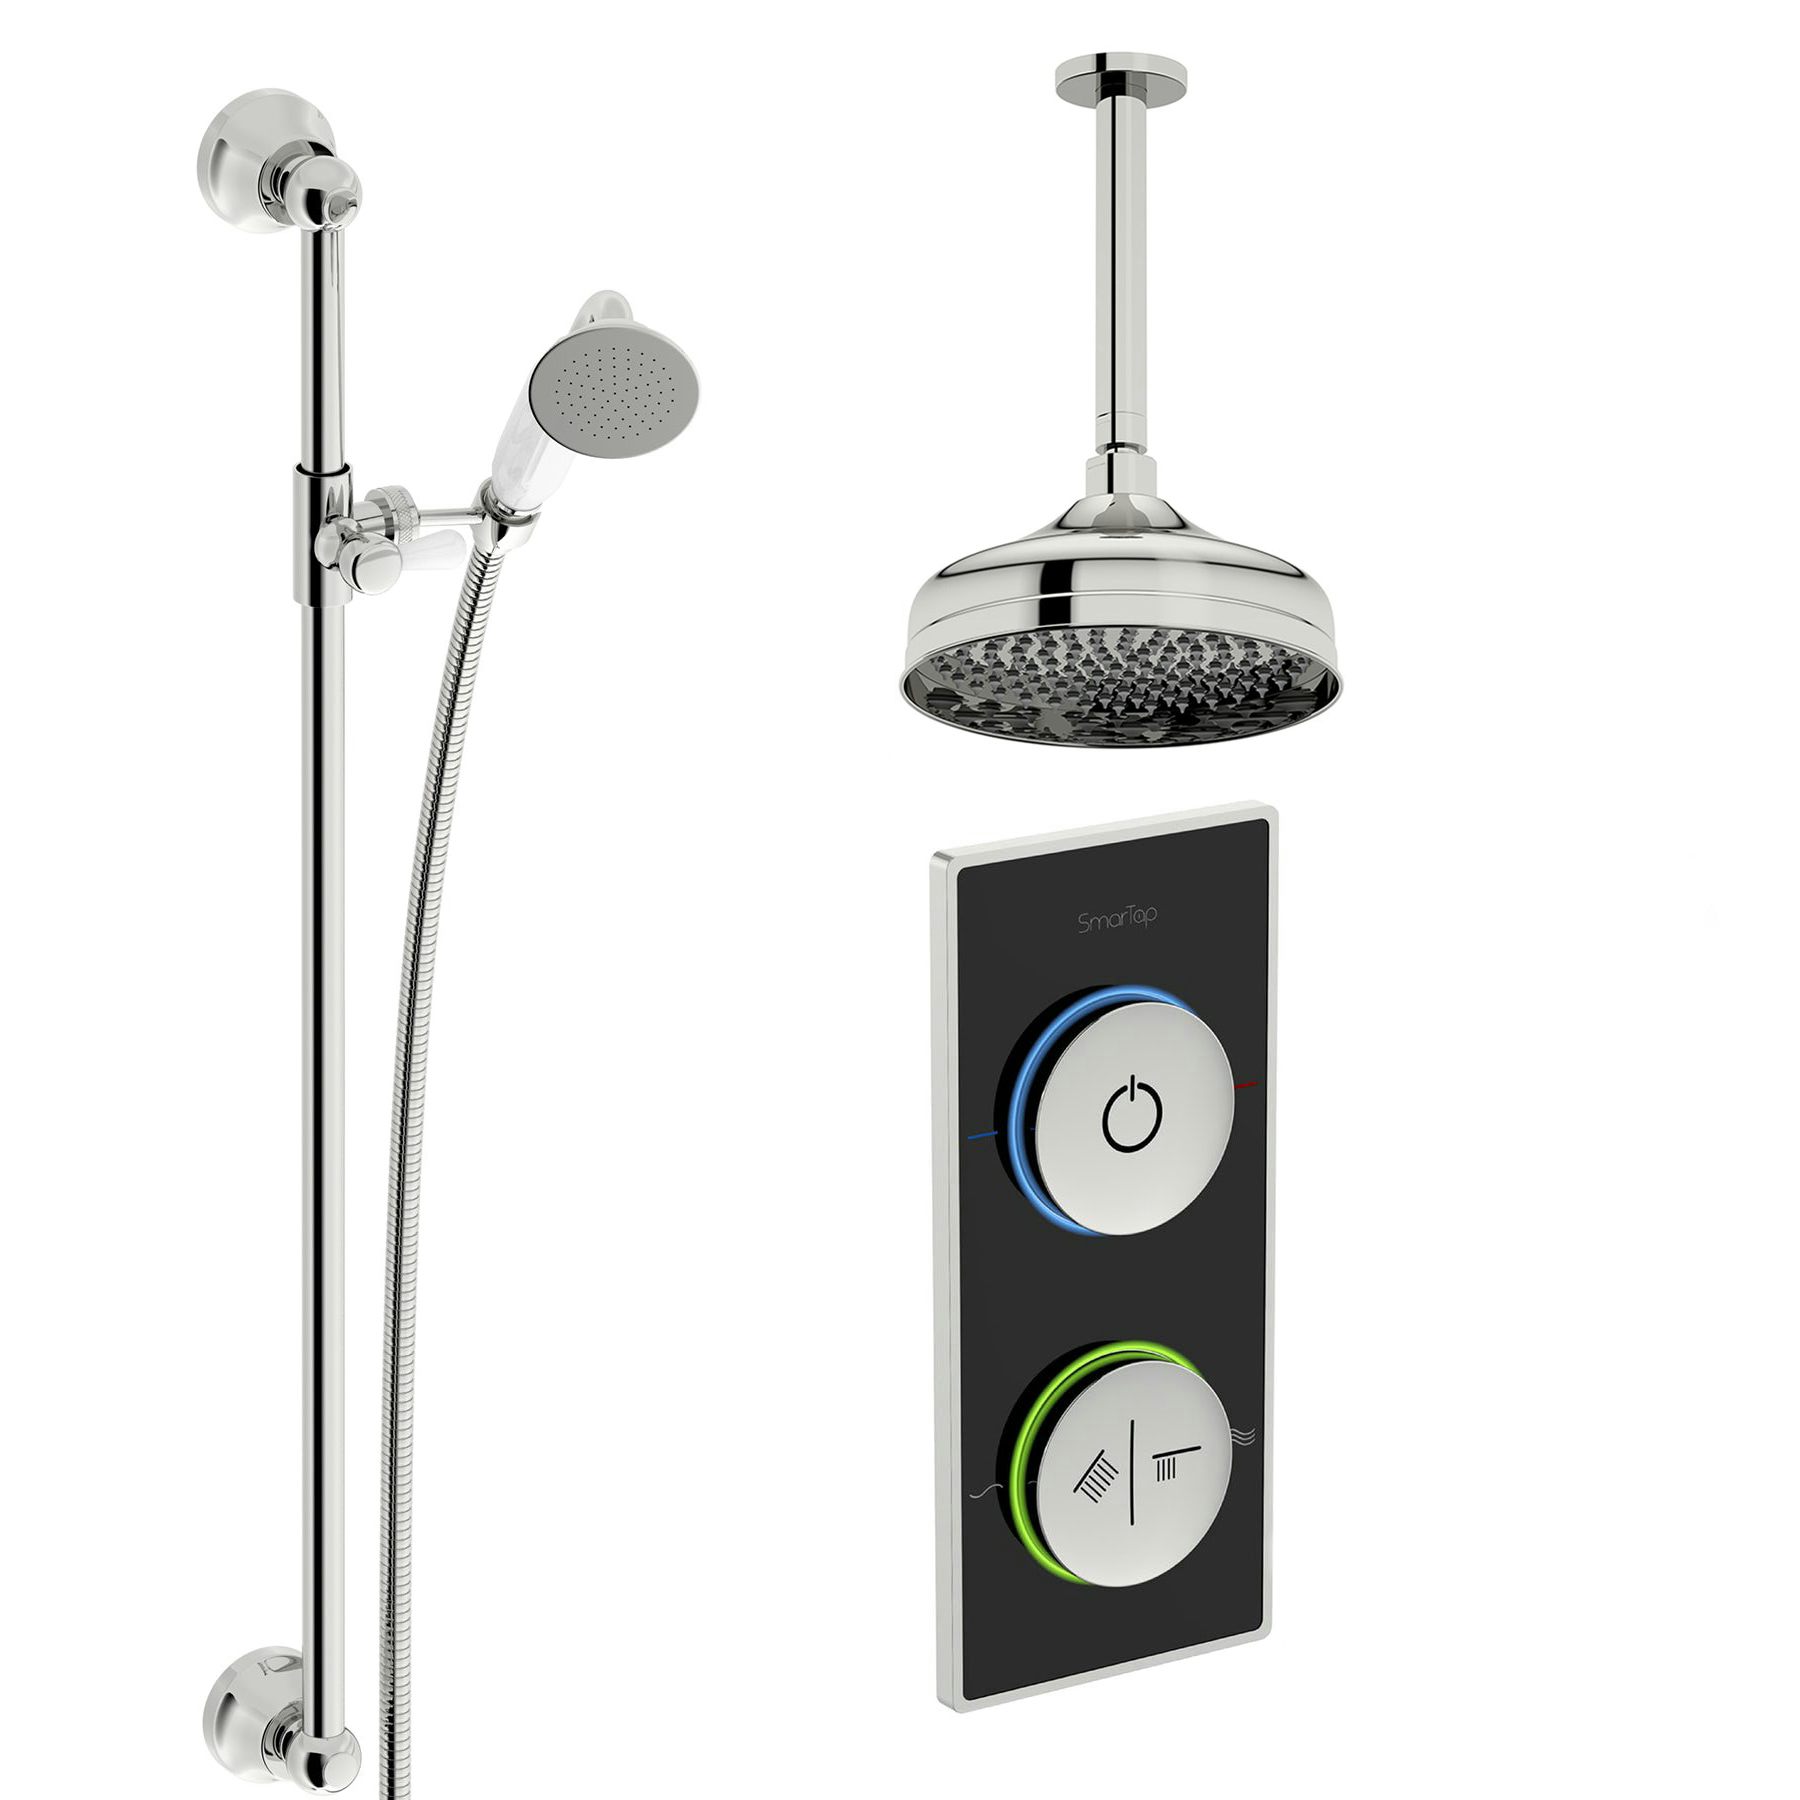 SmarTap black smart shower system with traditional slider rail and ceiling shower set